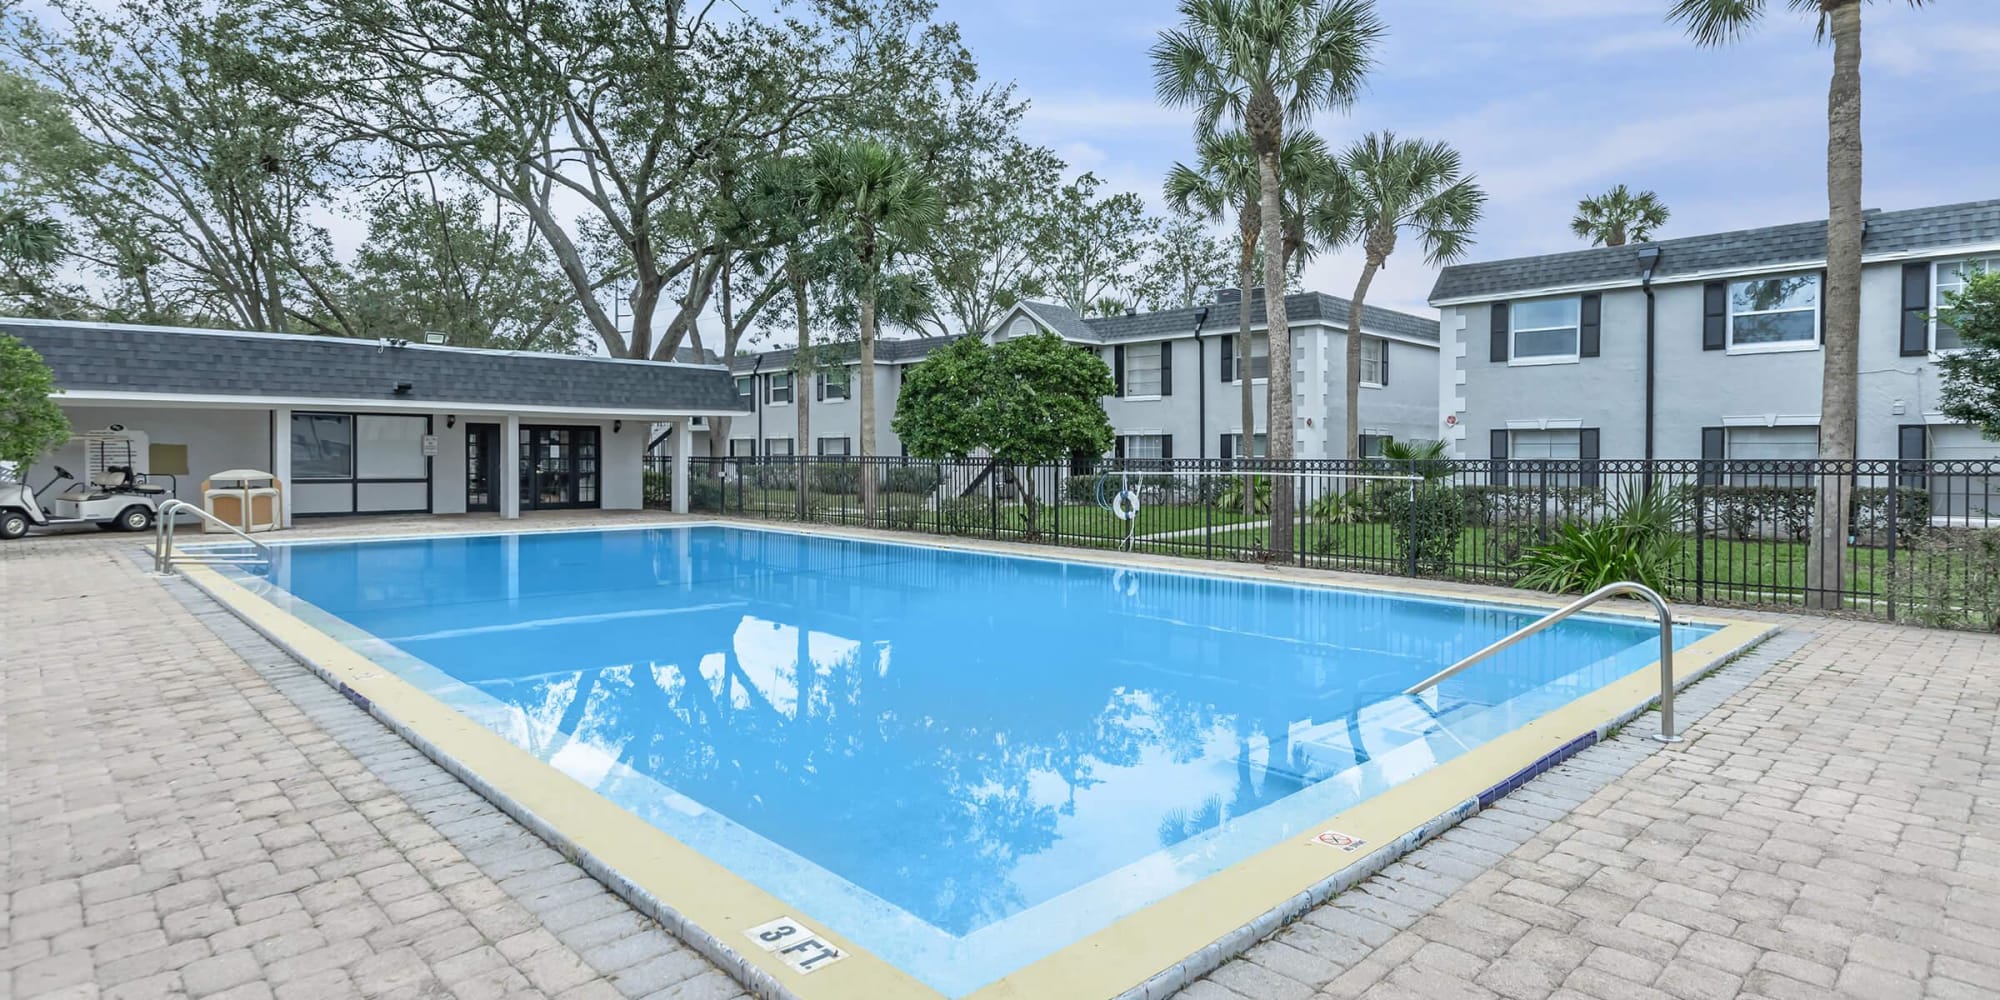 Swimming pool at Magnolia Court in Orlando, Florida